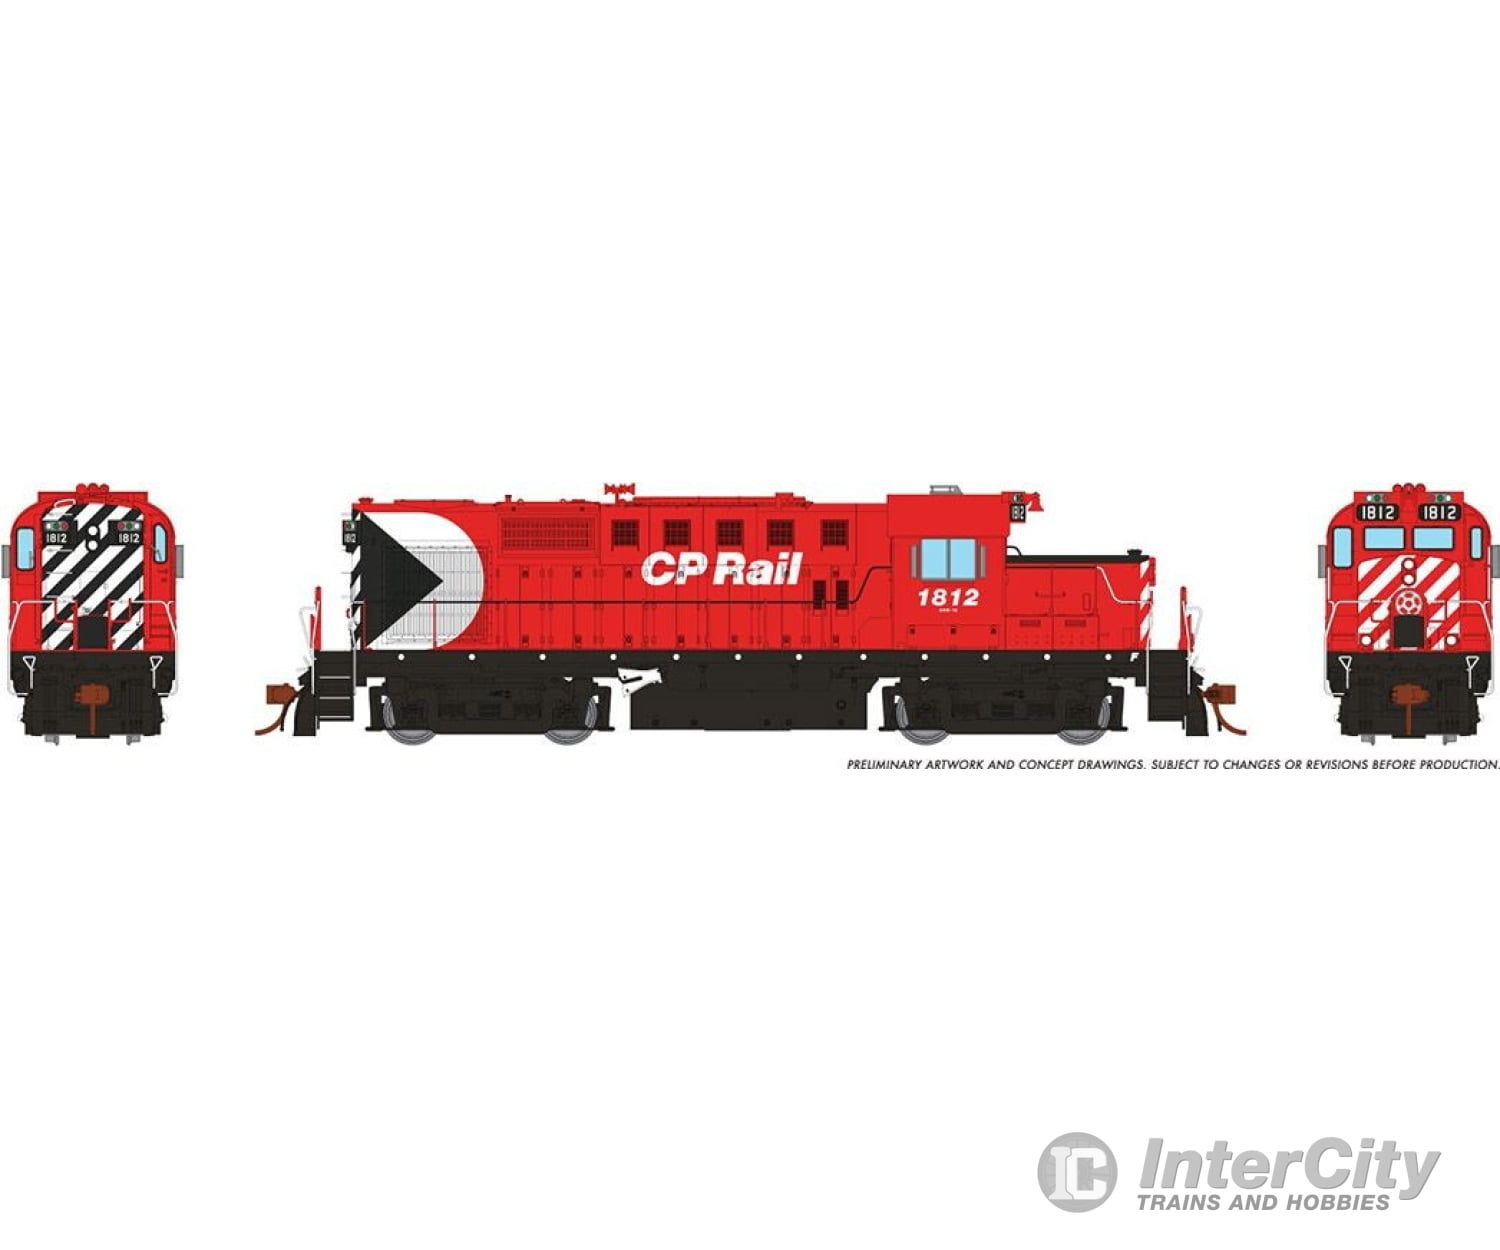 Rapido 032560 Ho Rs-18 (Dc/Dcc/Sound): Cp Rail (Multimark) #1812 Locomotives & Railcars